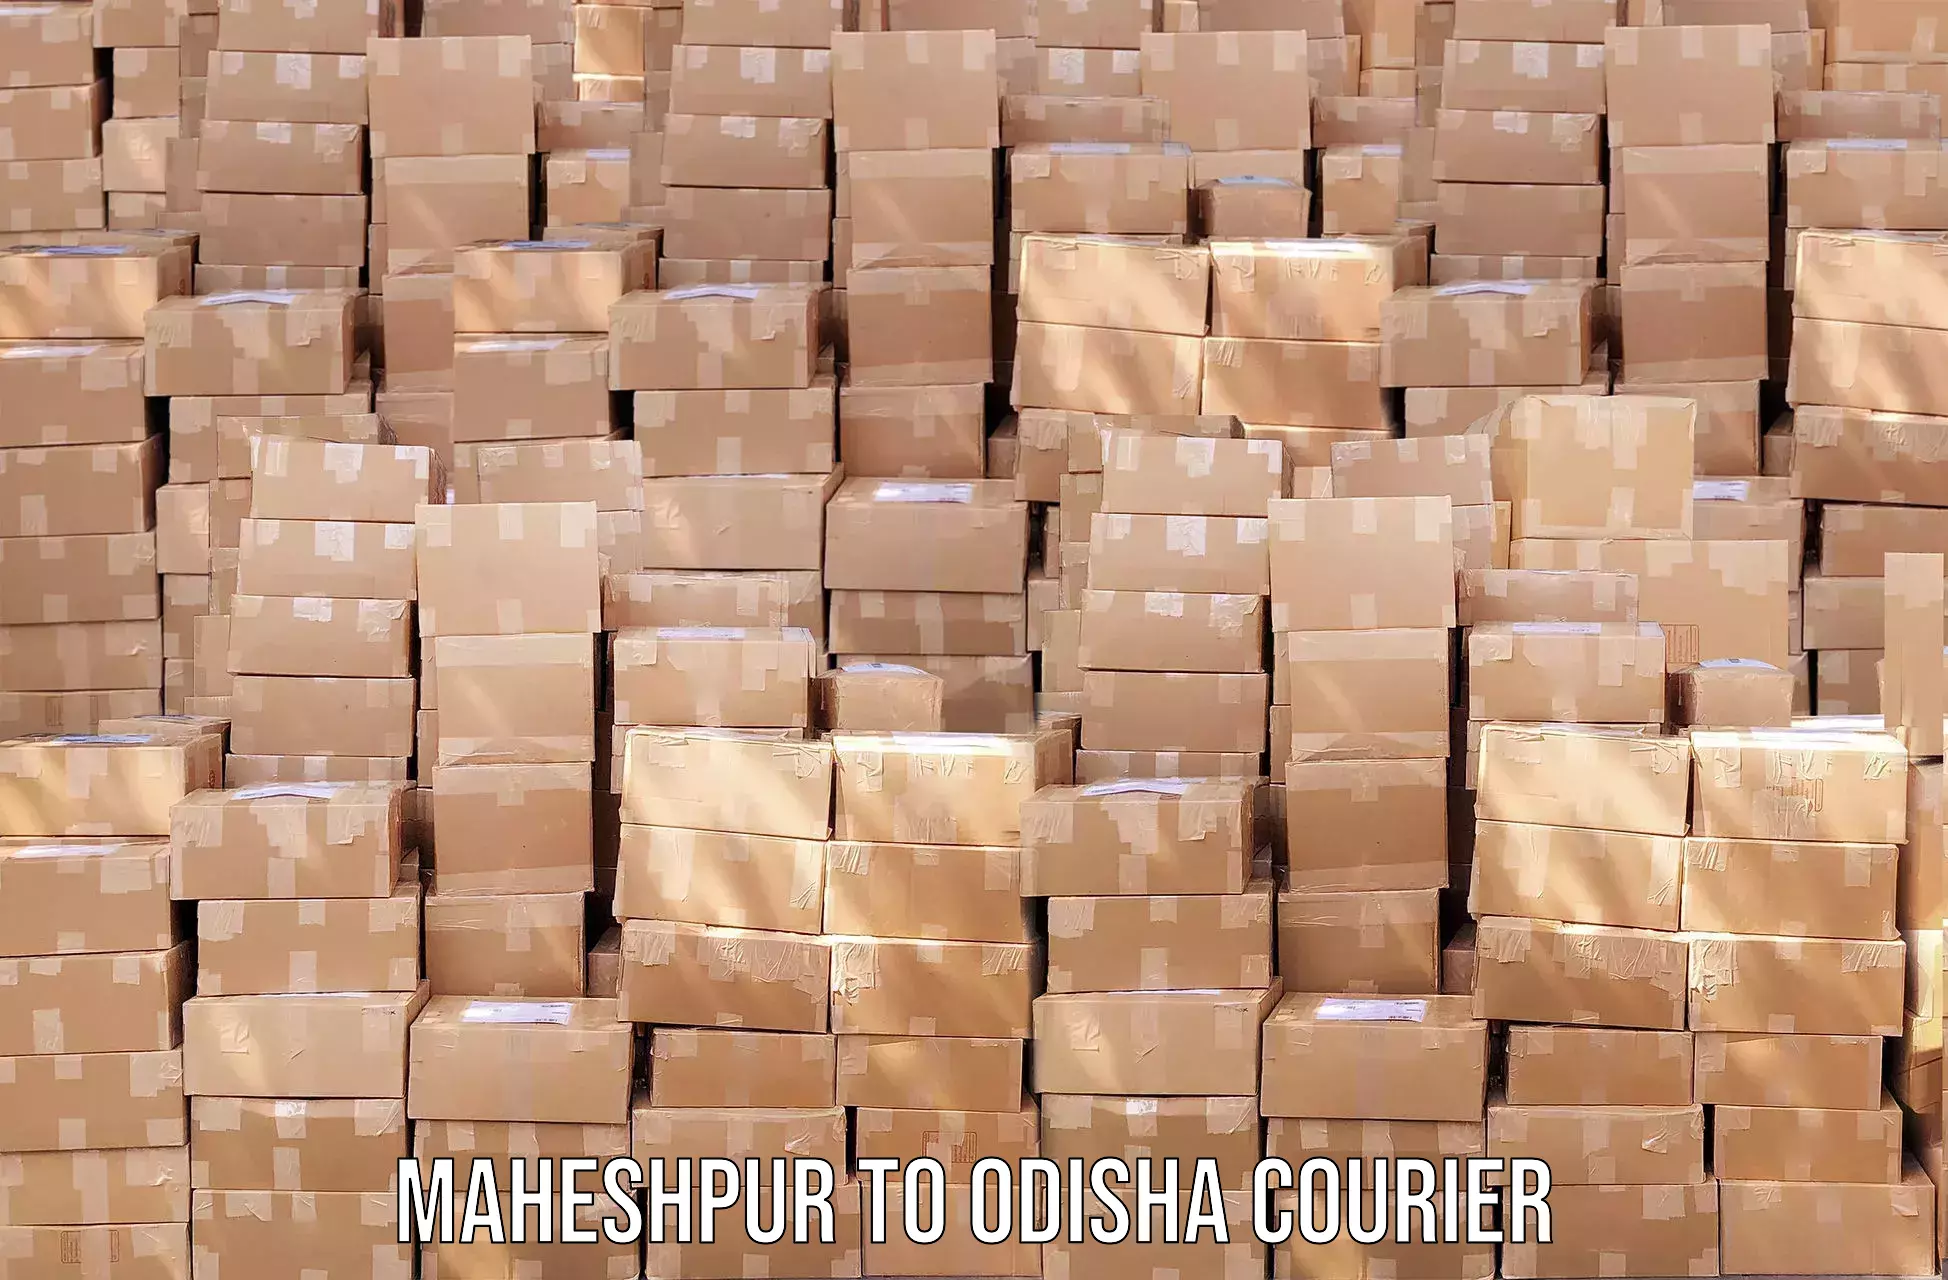 Global courier networks Maheshpur to Hinjilicut